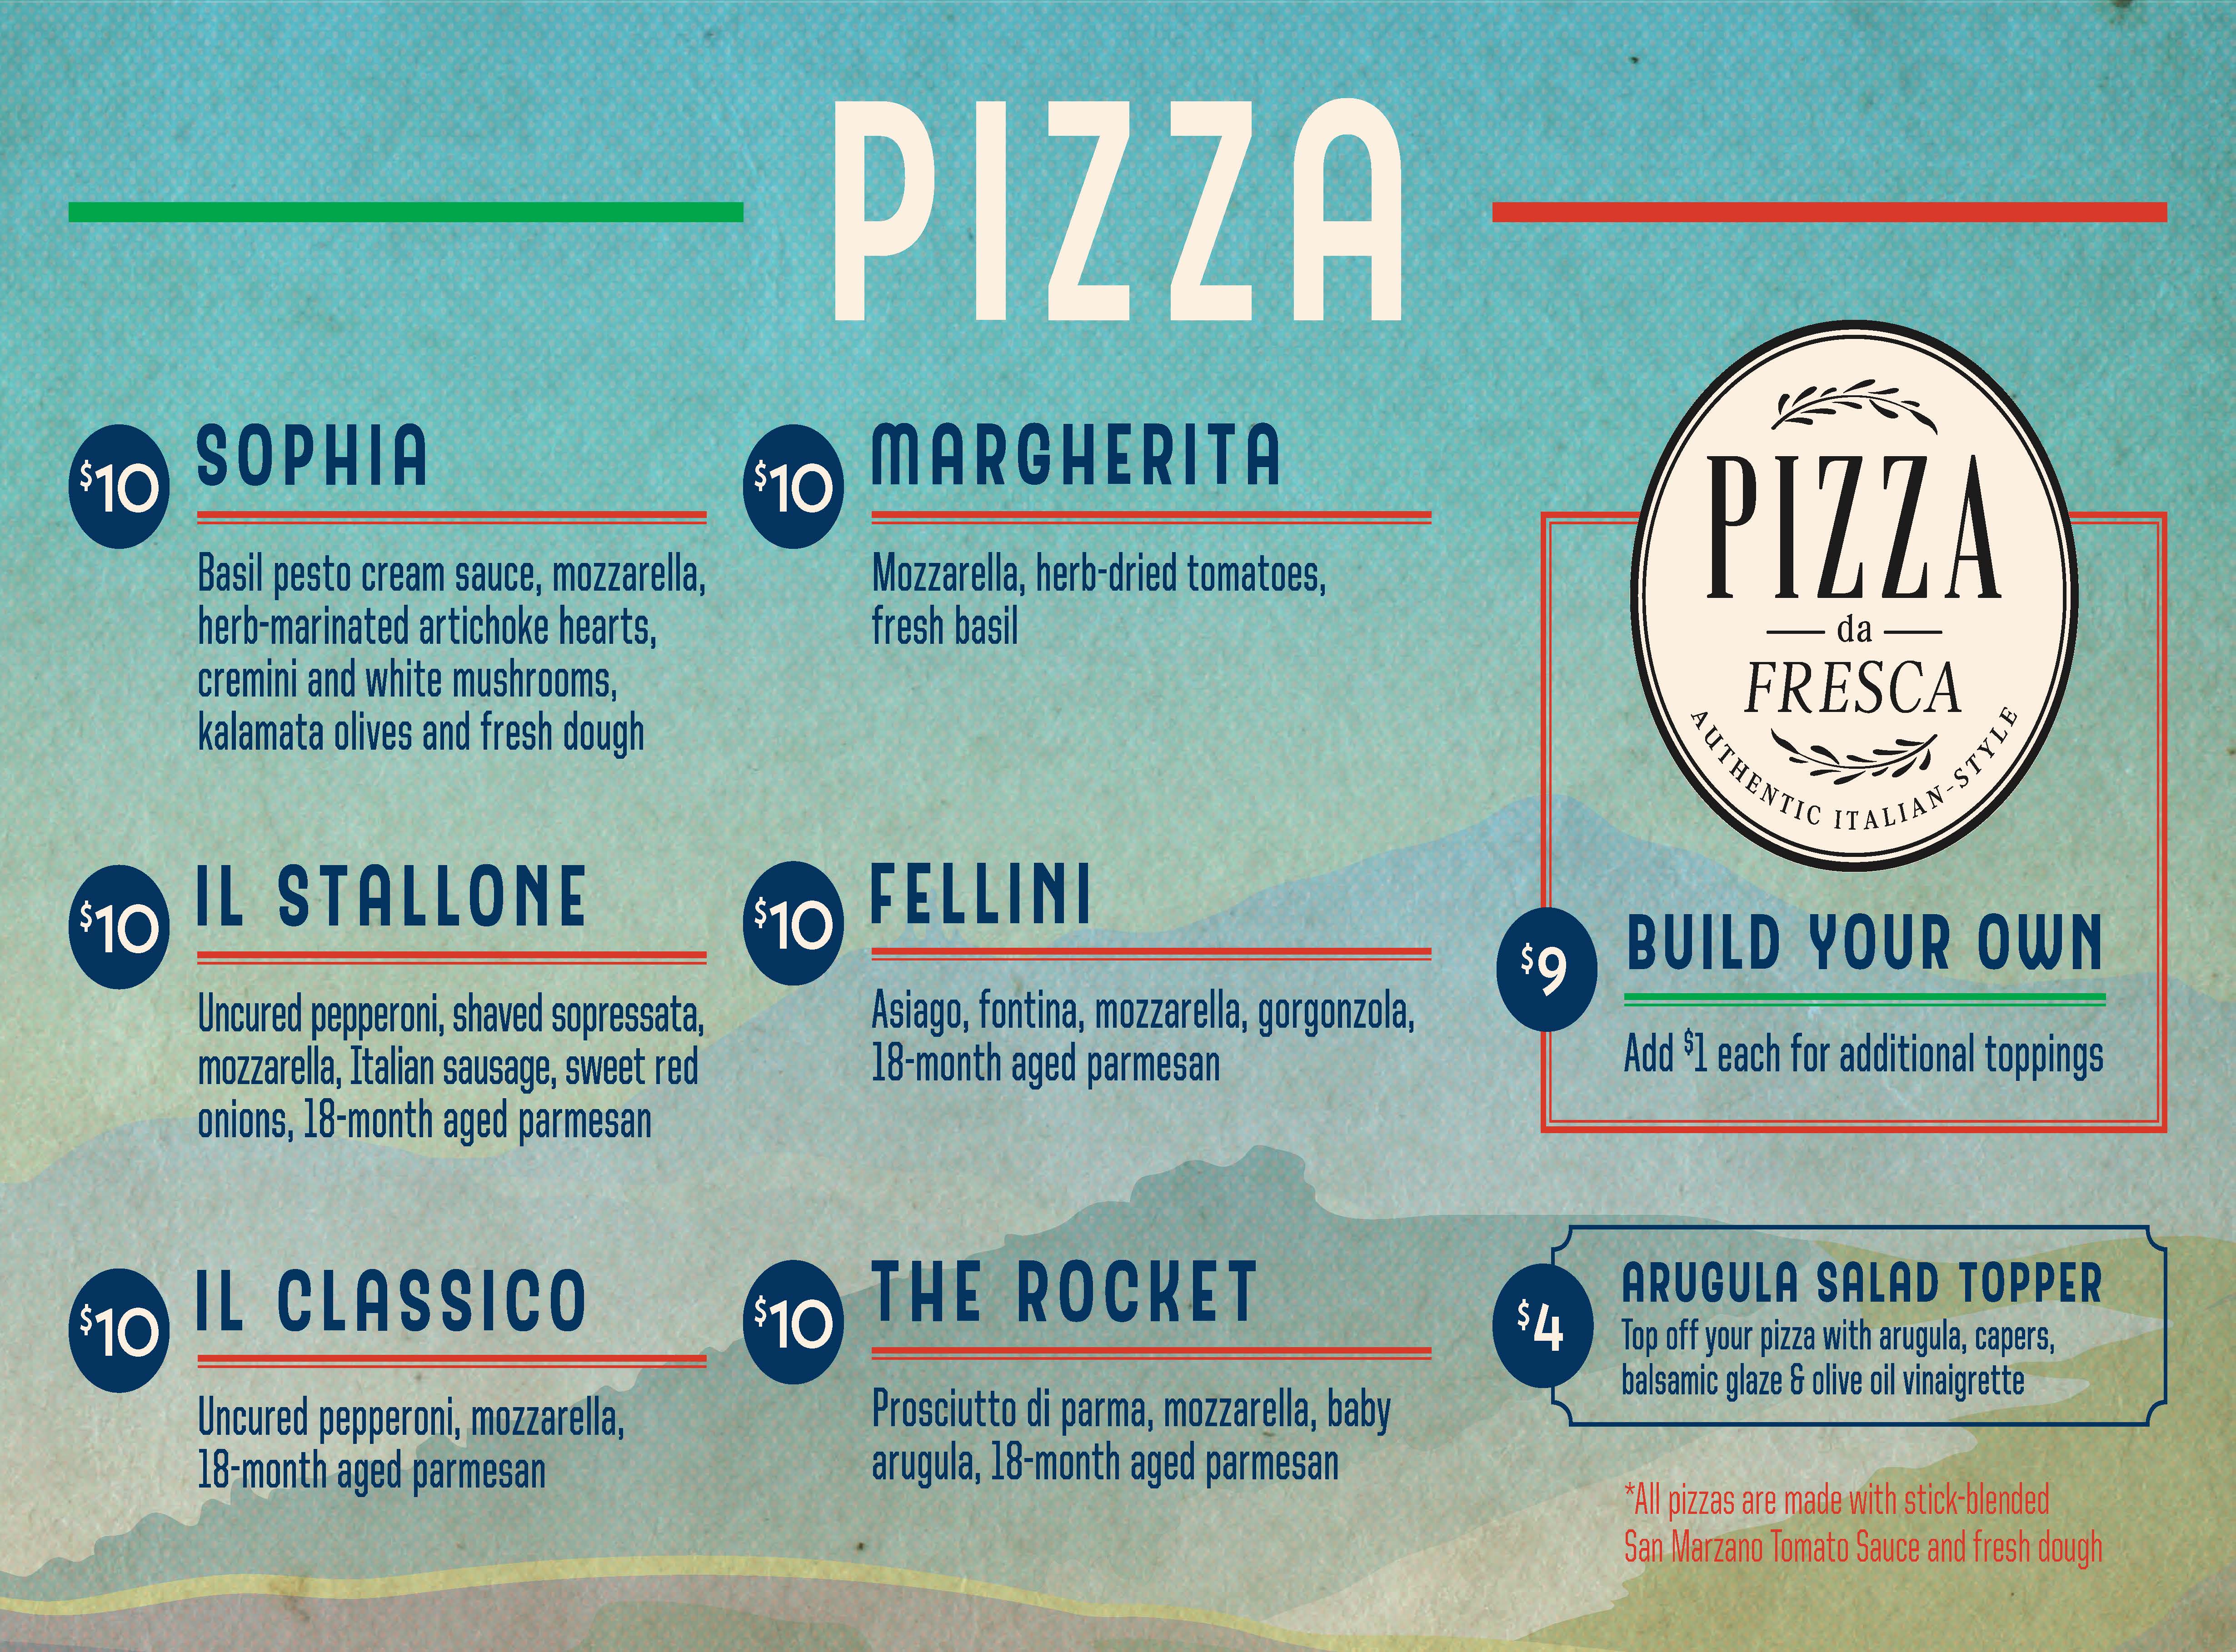 an image of the menu for Pizza da Fresca